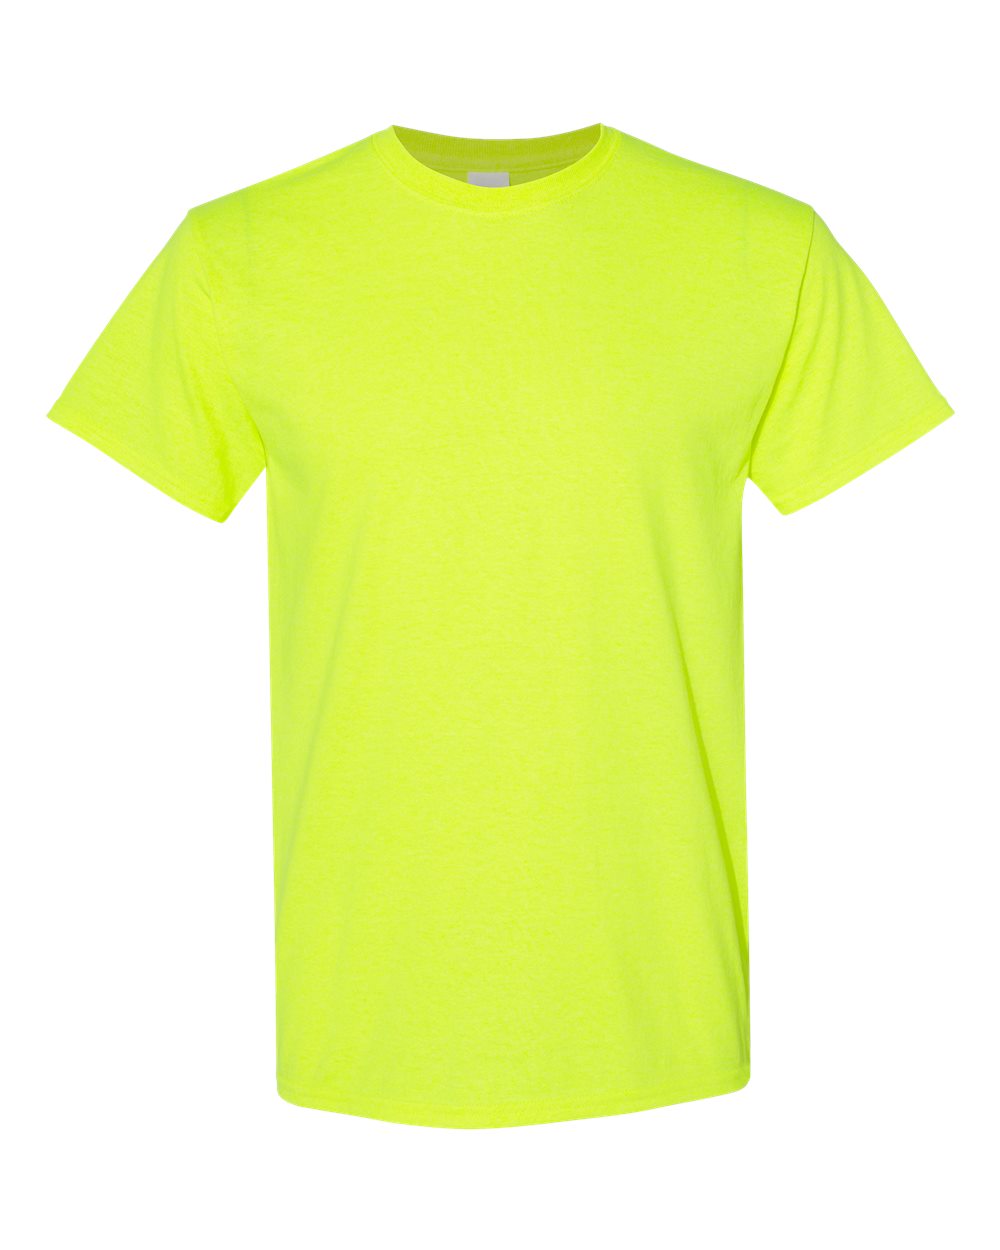 Dri-Fit Unisex Short Sleeve T-Shirt | Twirl